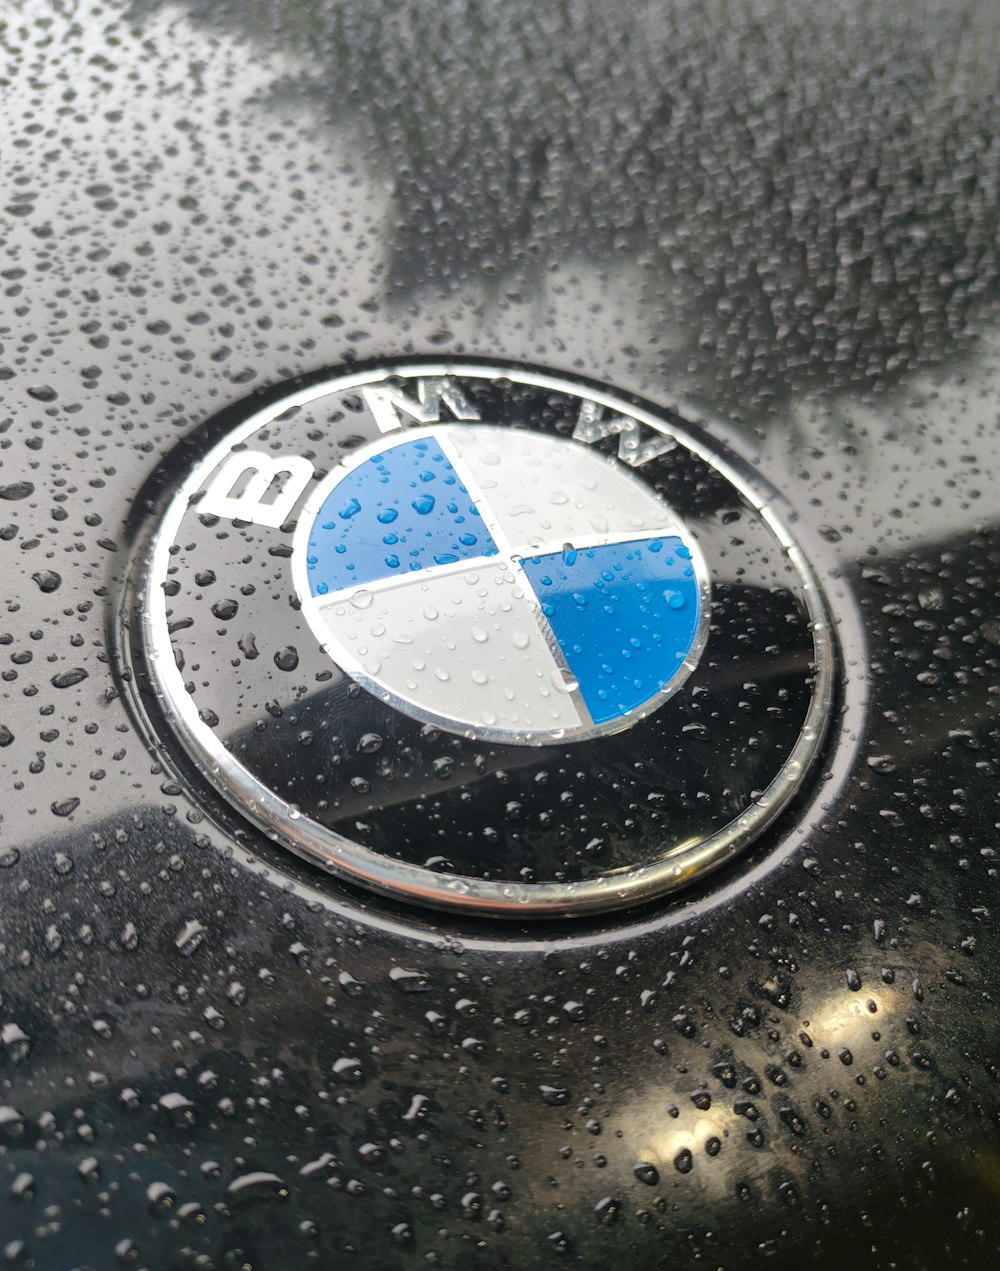 File:BMW 1970-1989 Logo.svg - Wikimedia Commons